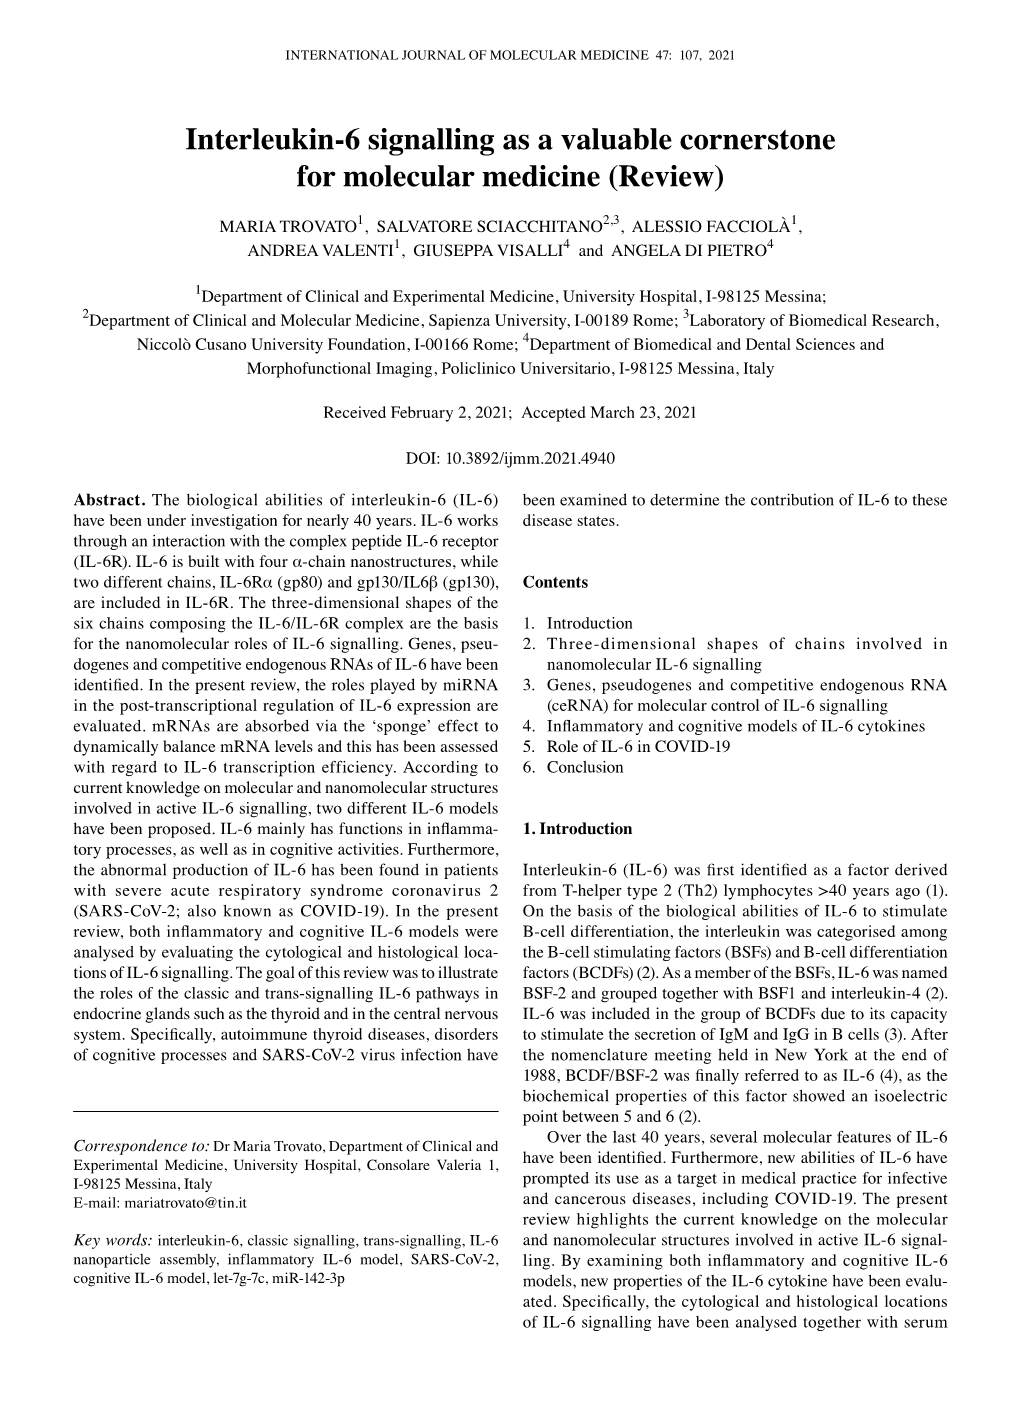 Interleukin‑6 Signalling As a Valuable Cornerstone for Molecular Medicine (Review)